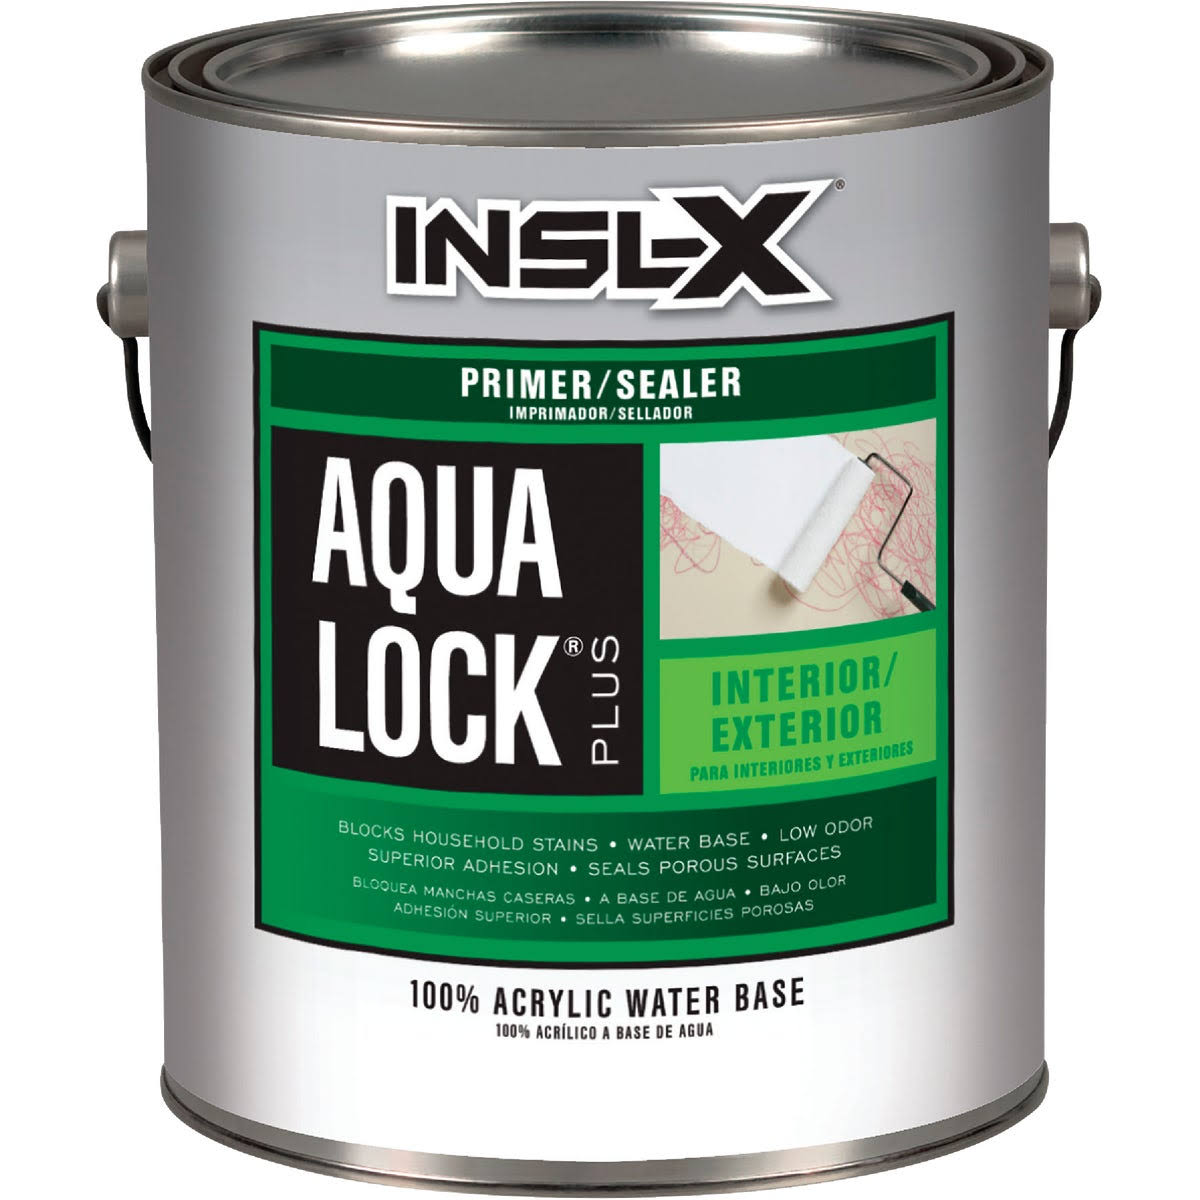 INSL-X Aqua Lock Primer Sealer